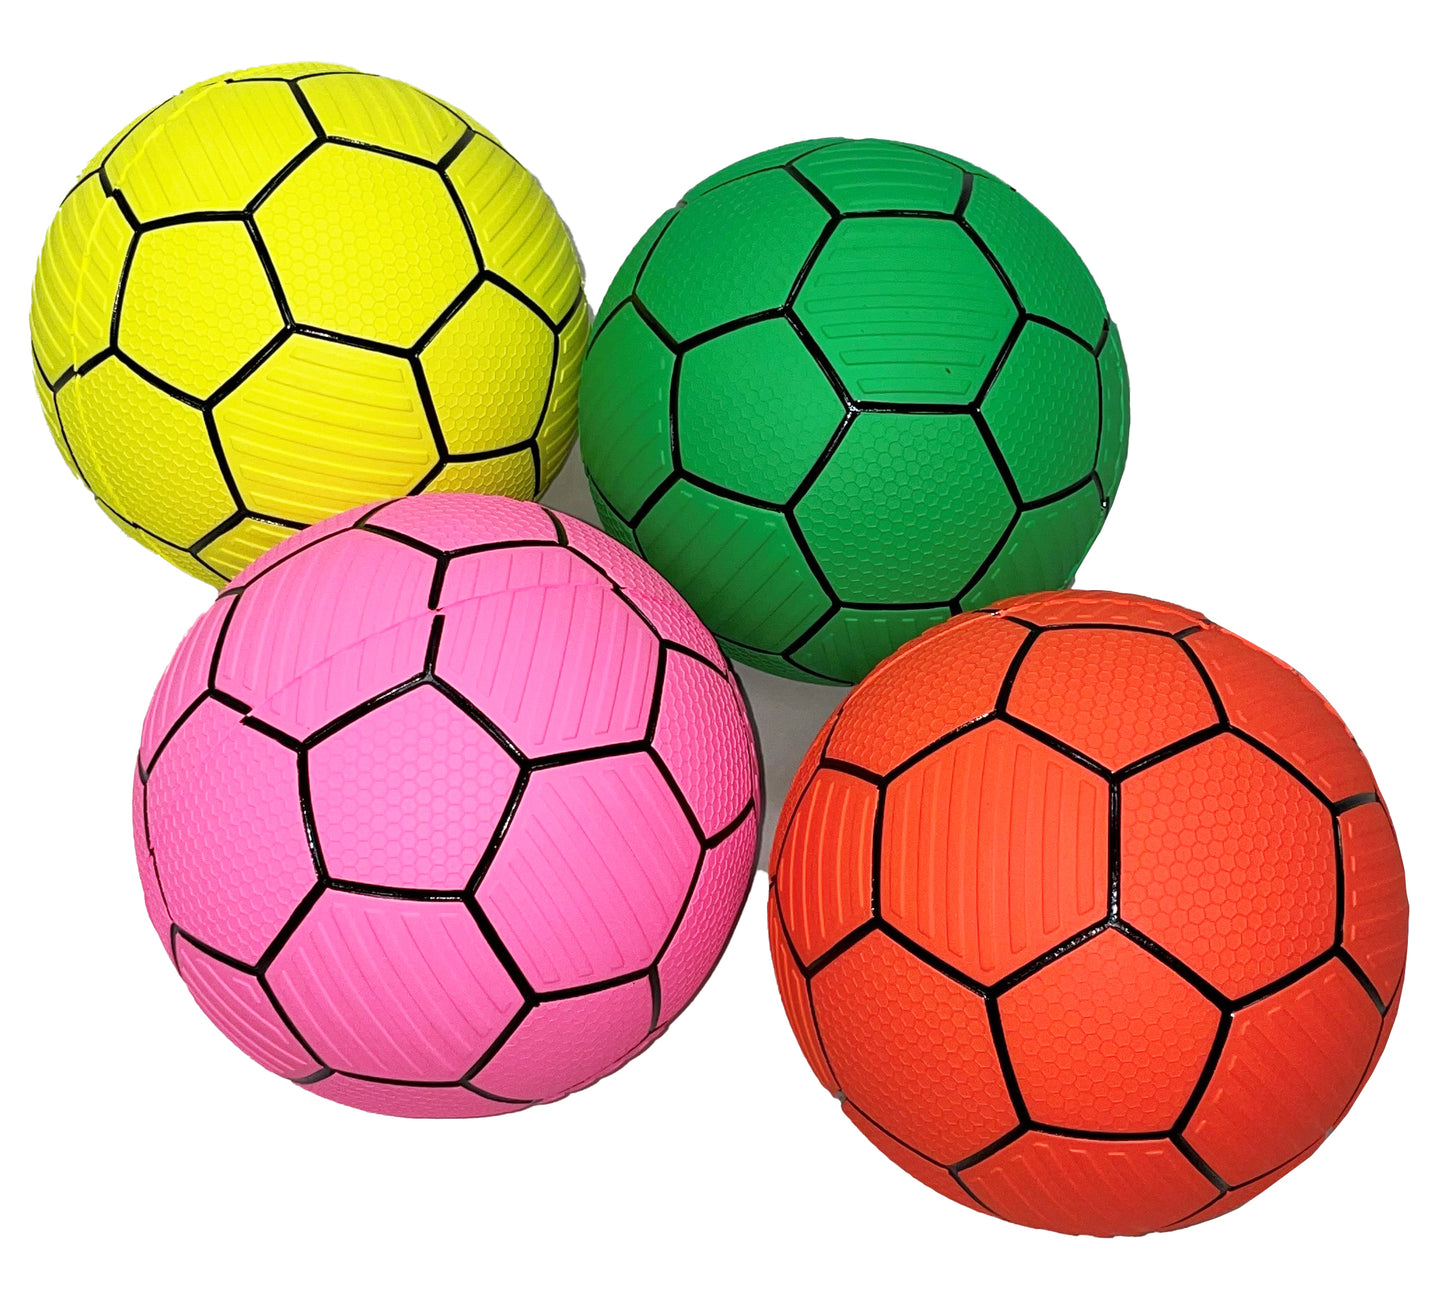 Ultimate Grip Soft Skin Foam Soccer Ball